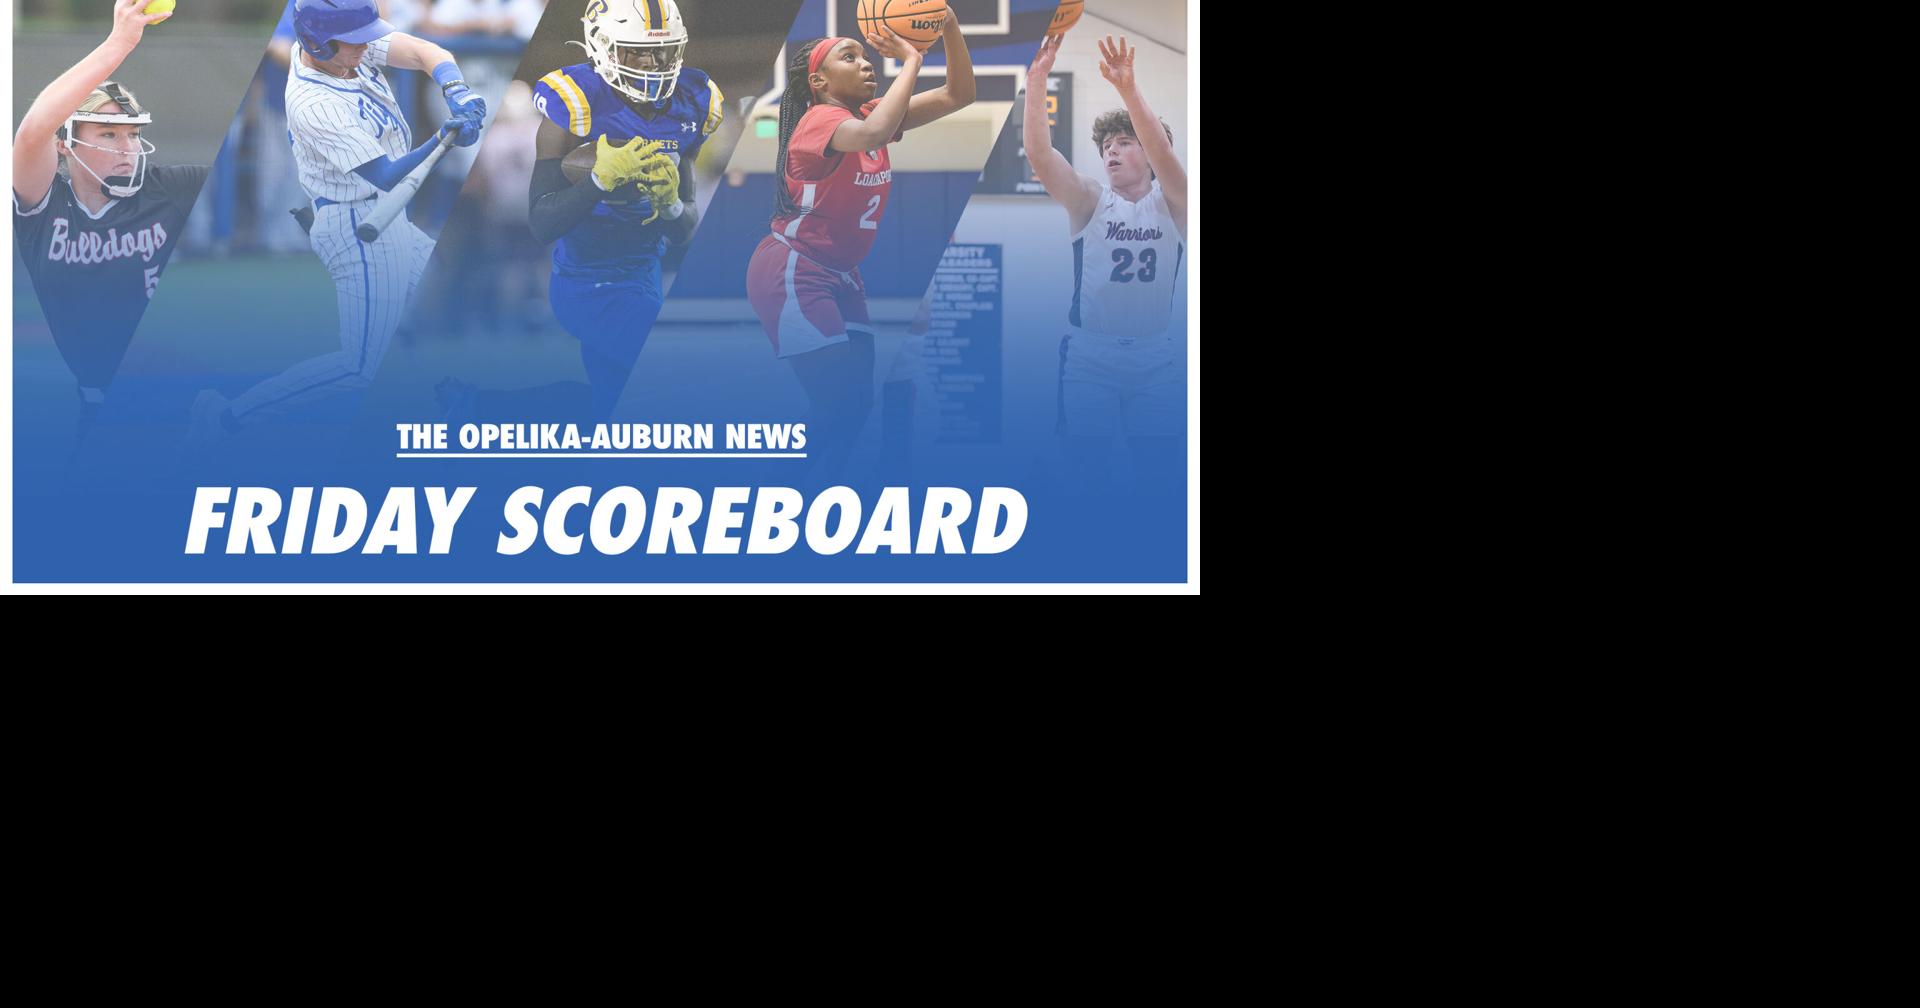 Auburn High Soccer and Baseball Triumphs Headline Opelika-Auburn News Scoreboard